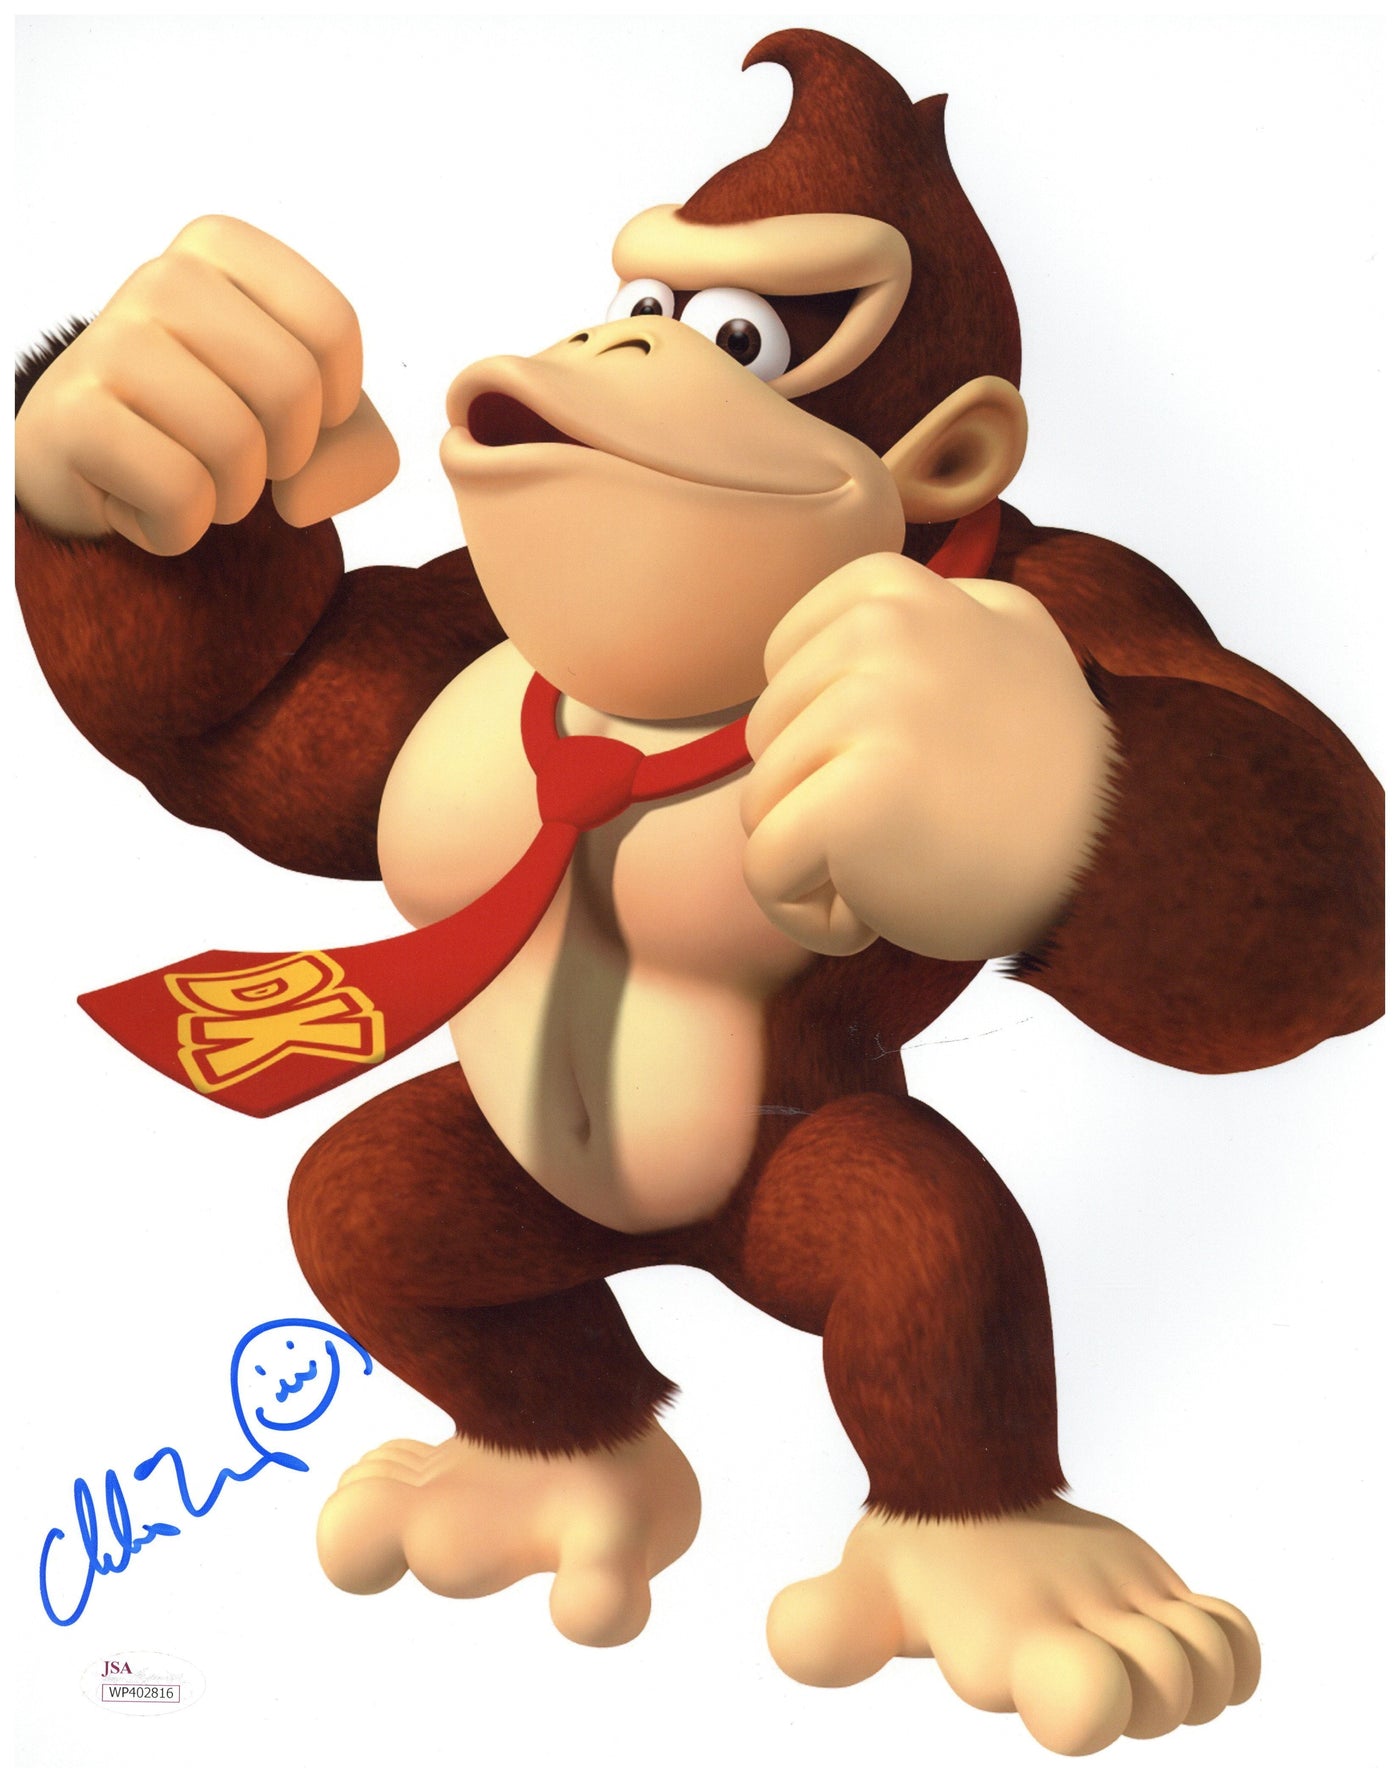 Charles Martinet Signed 11x14 Photo Super Mario Donkey Kong Autographed JSA COA